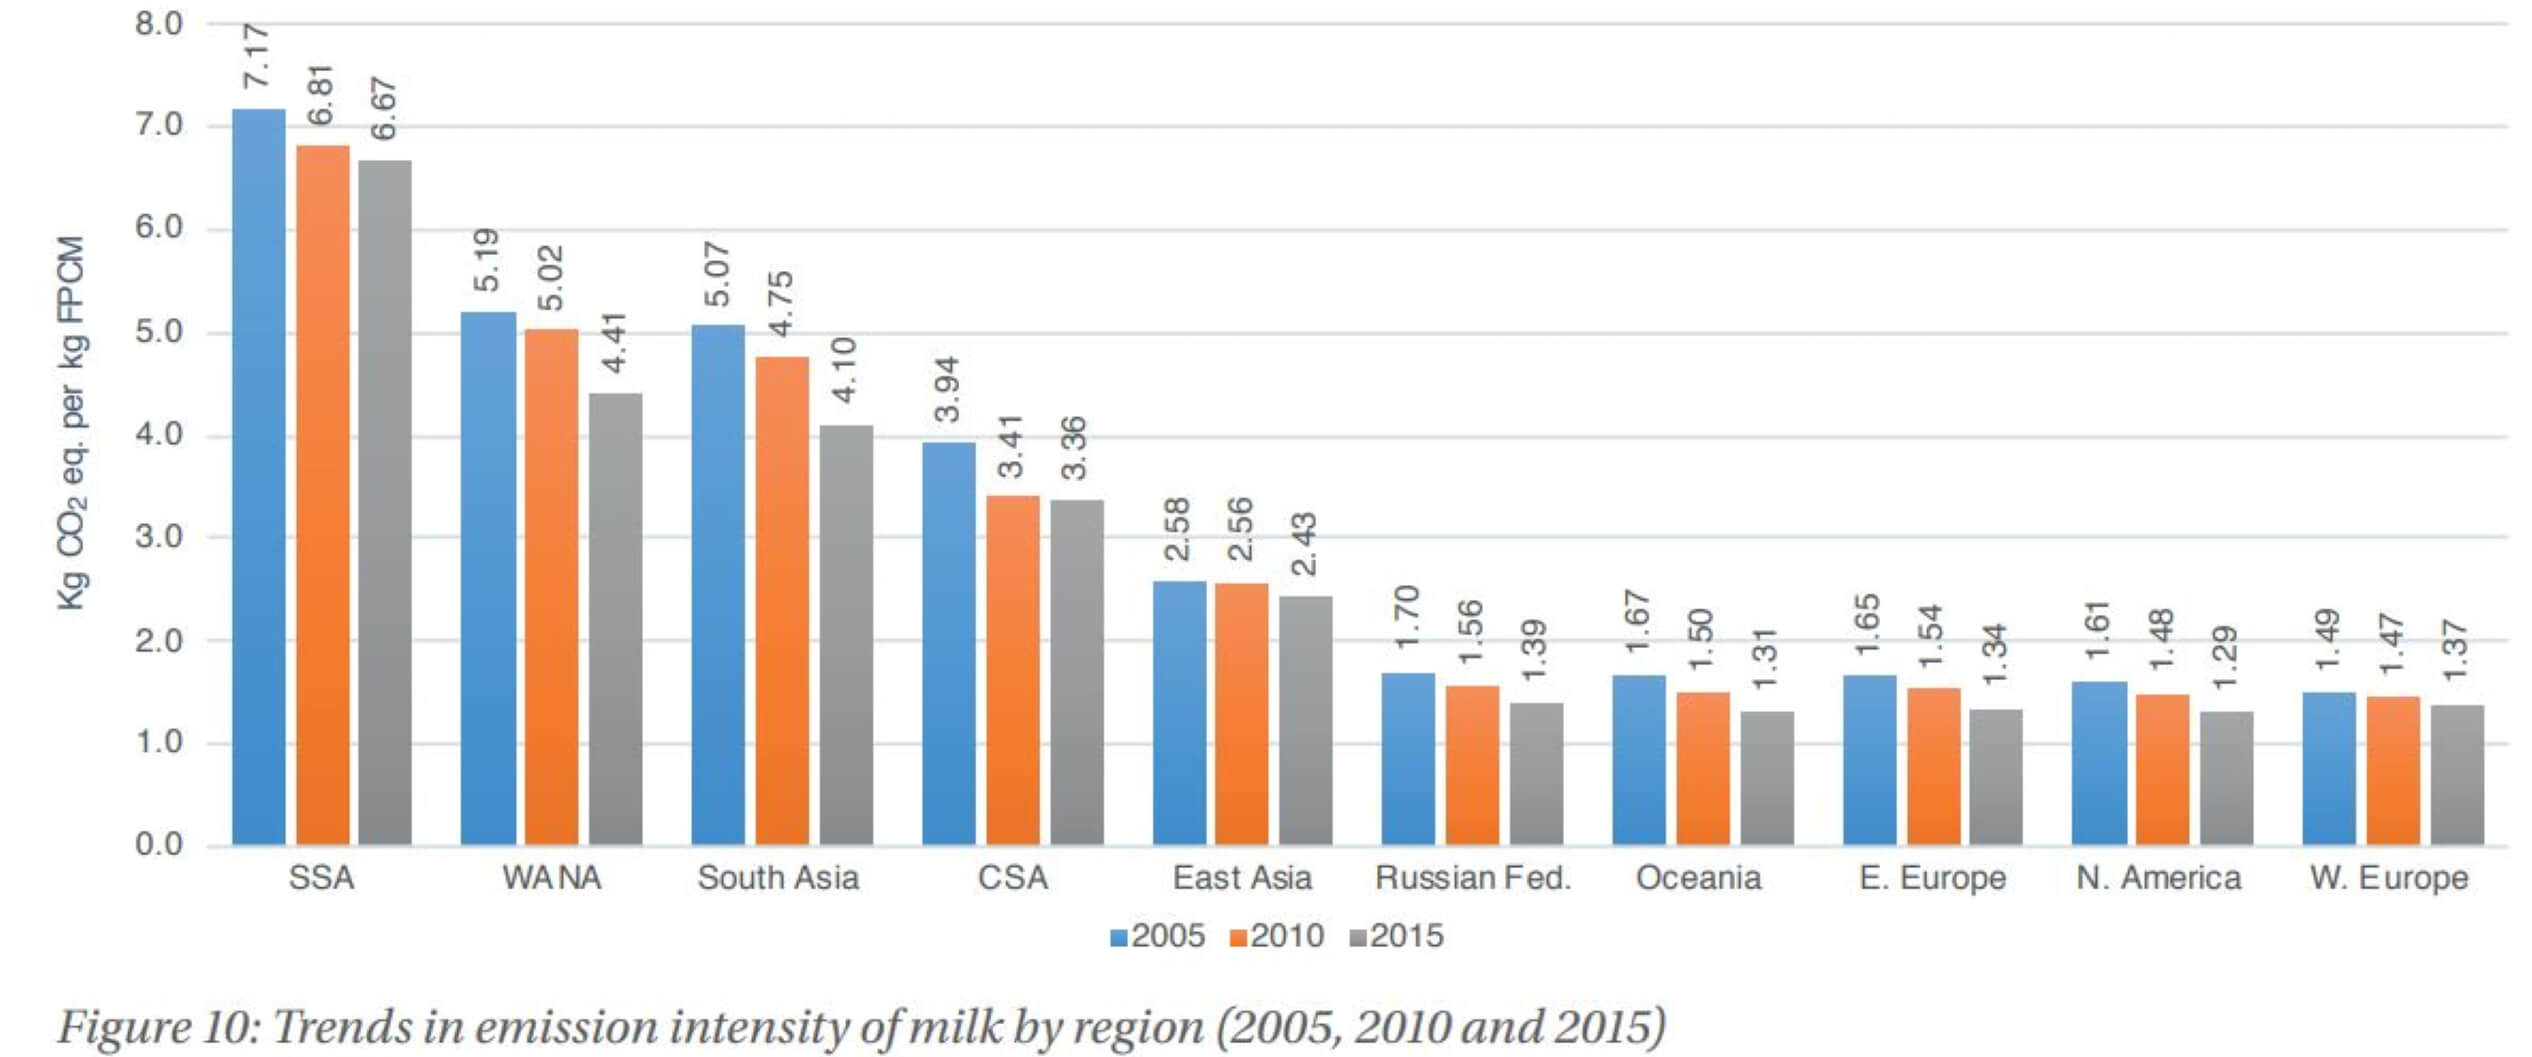 Trends in emission intensity of milk by region